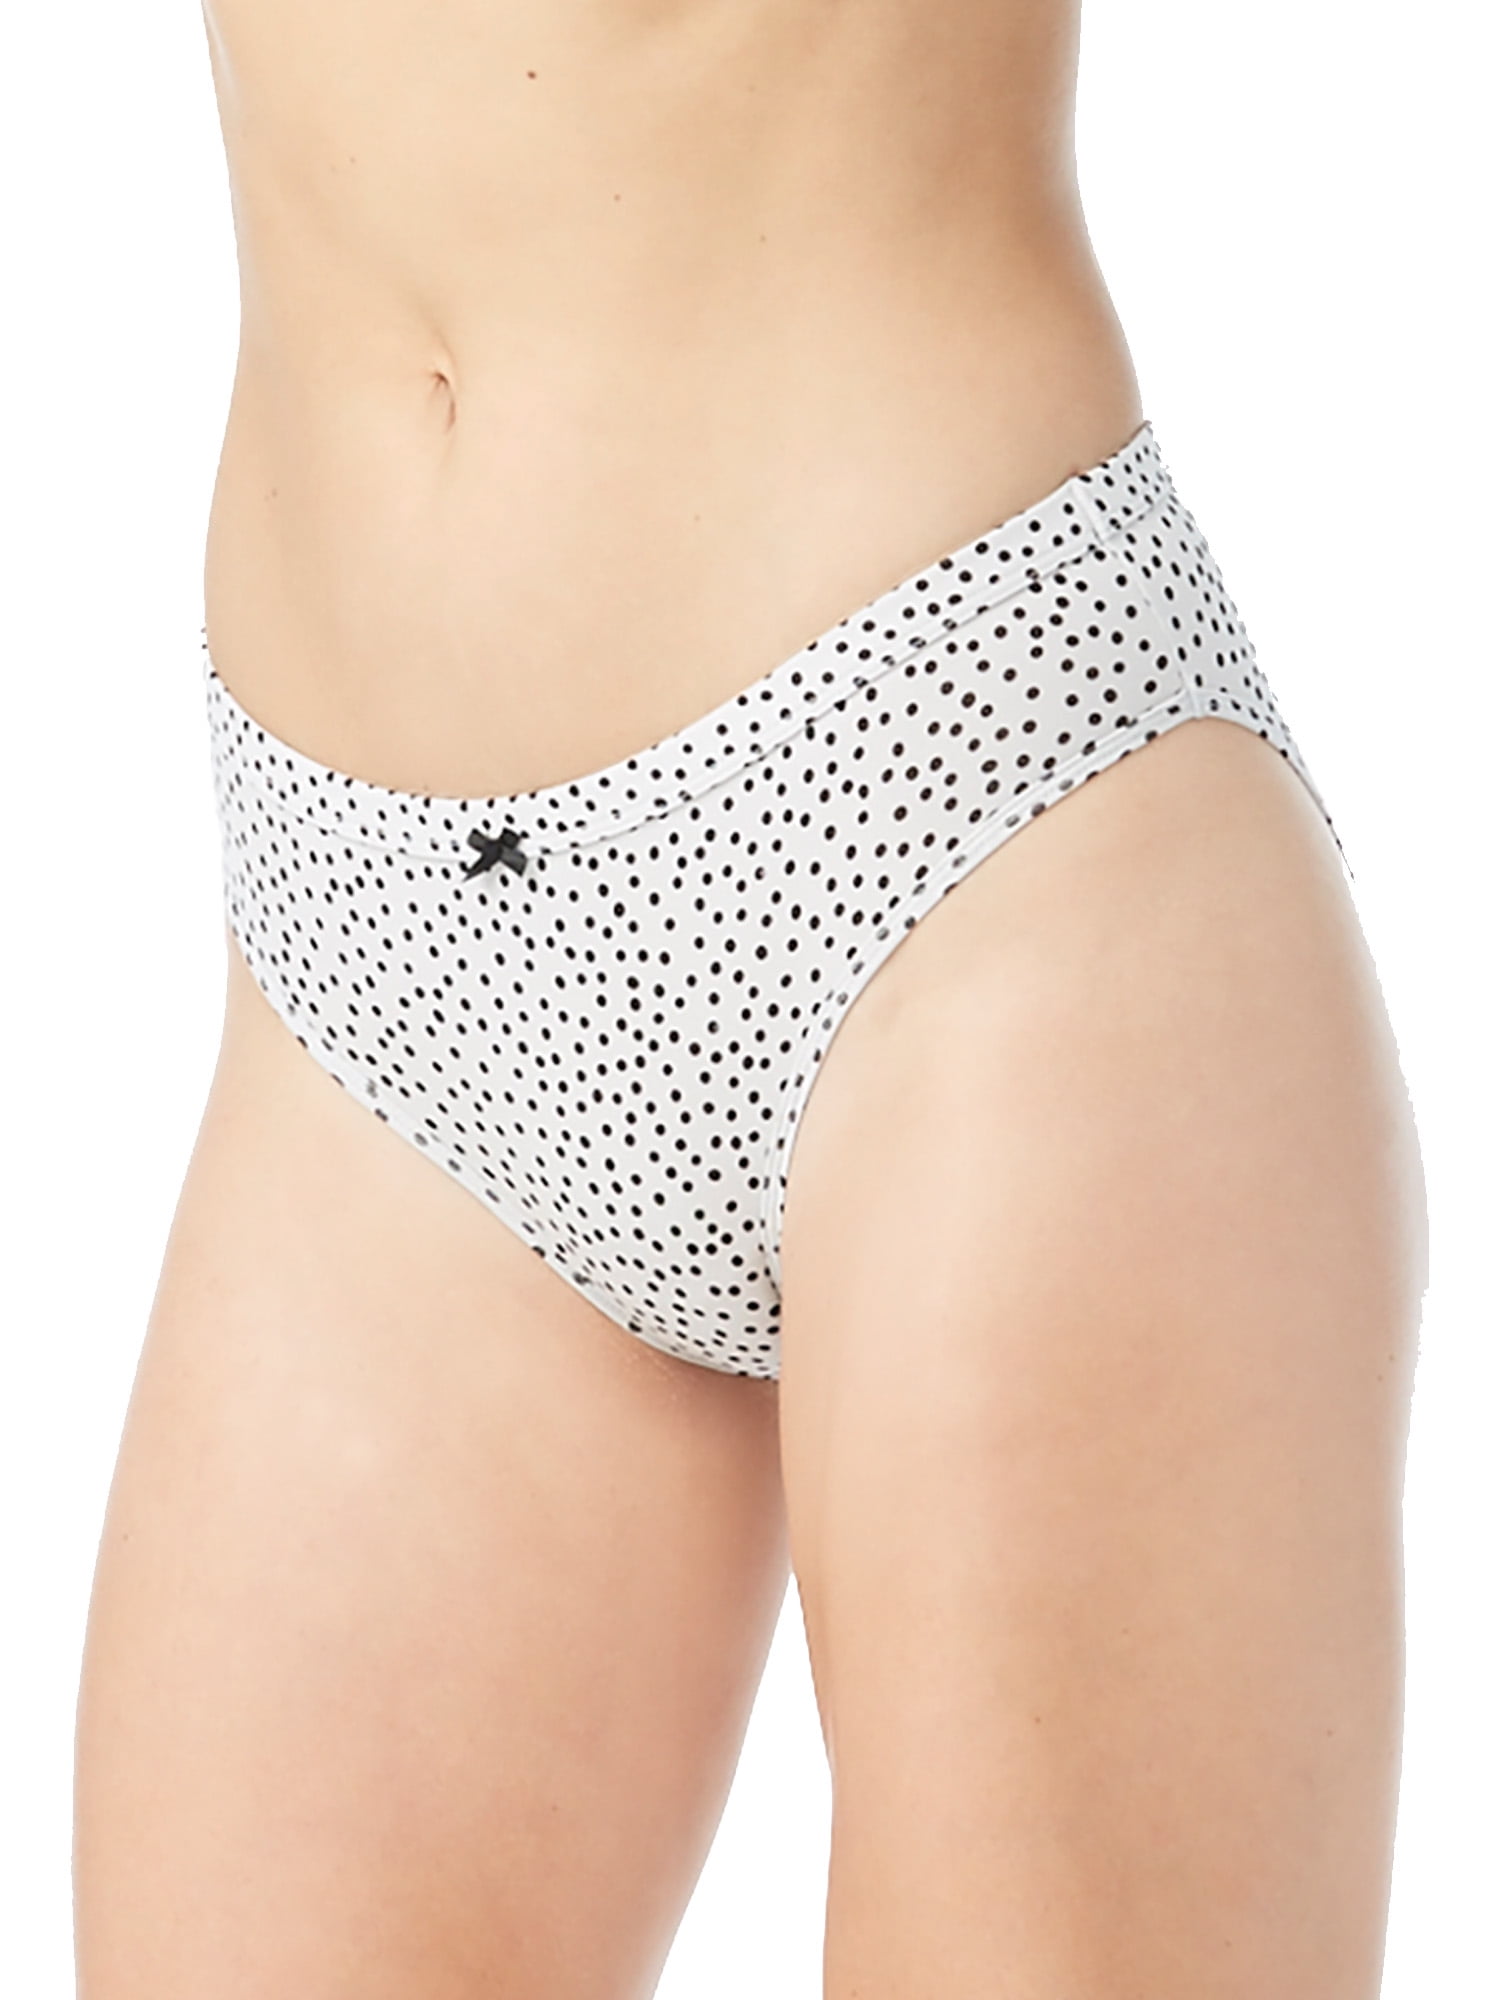 NWT No Boundaries Lace Thong Panties Black And White Dots Design Size XL  (15-17)